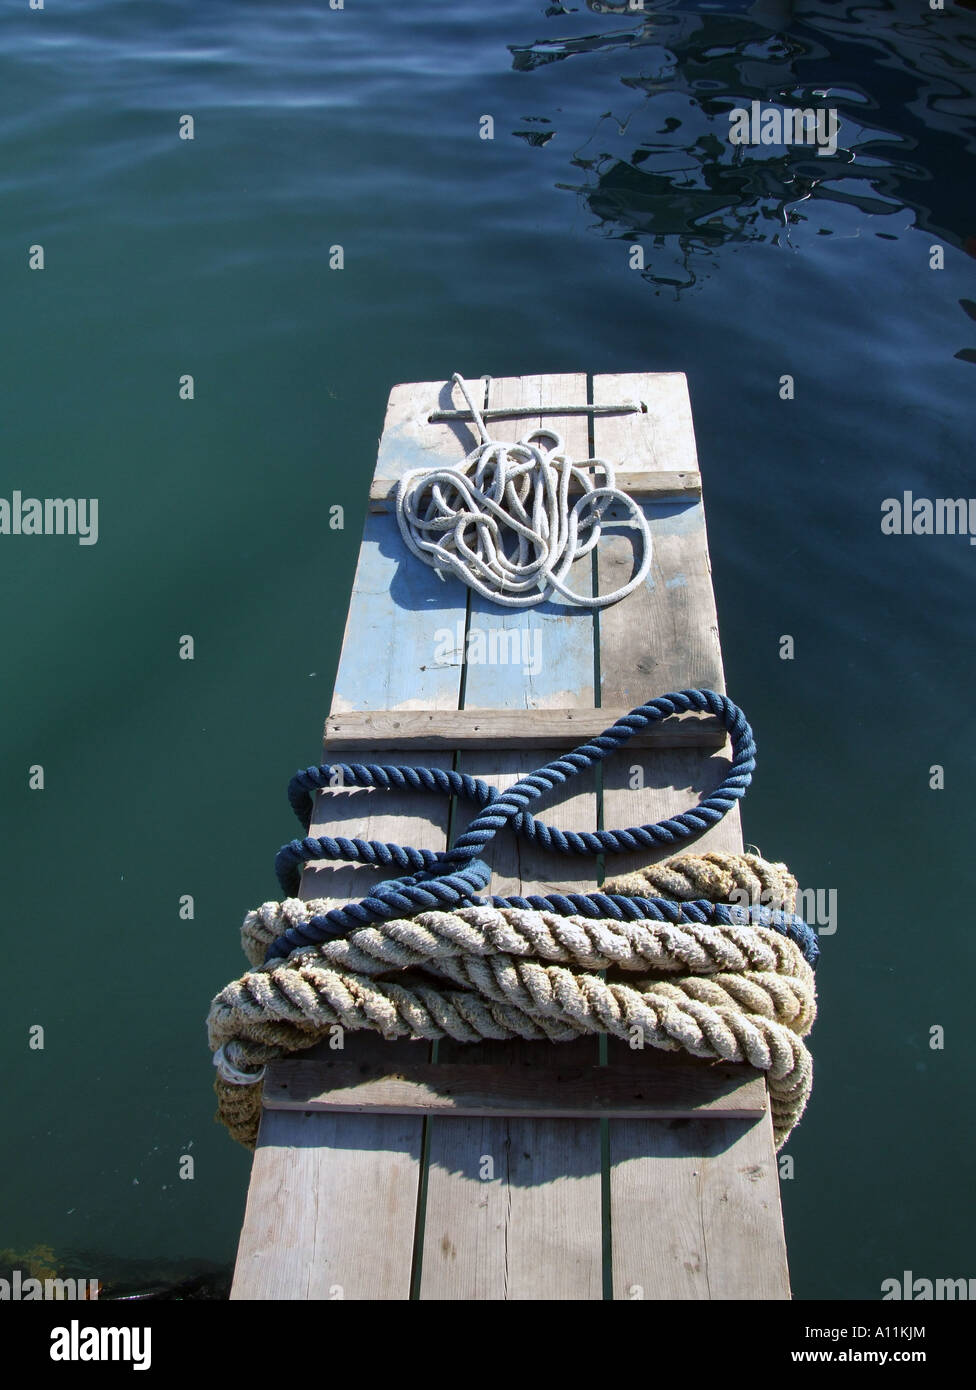 https://c8.alamy.com/comp/A11KJM/mooring-ropes-on-small-jetty-by-sea-A11KJM.jpg